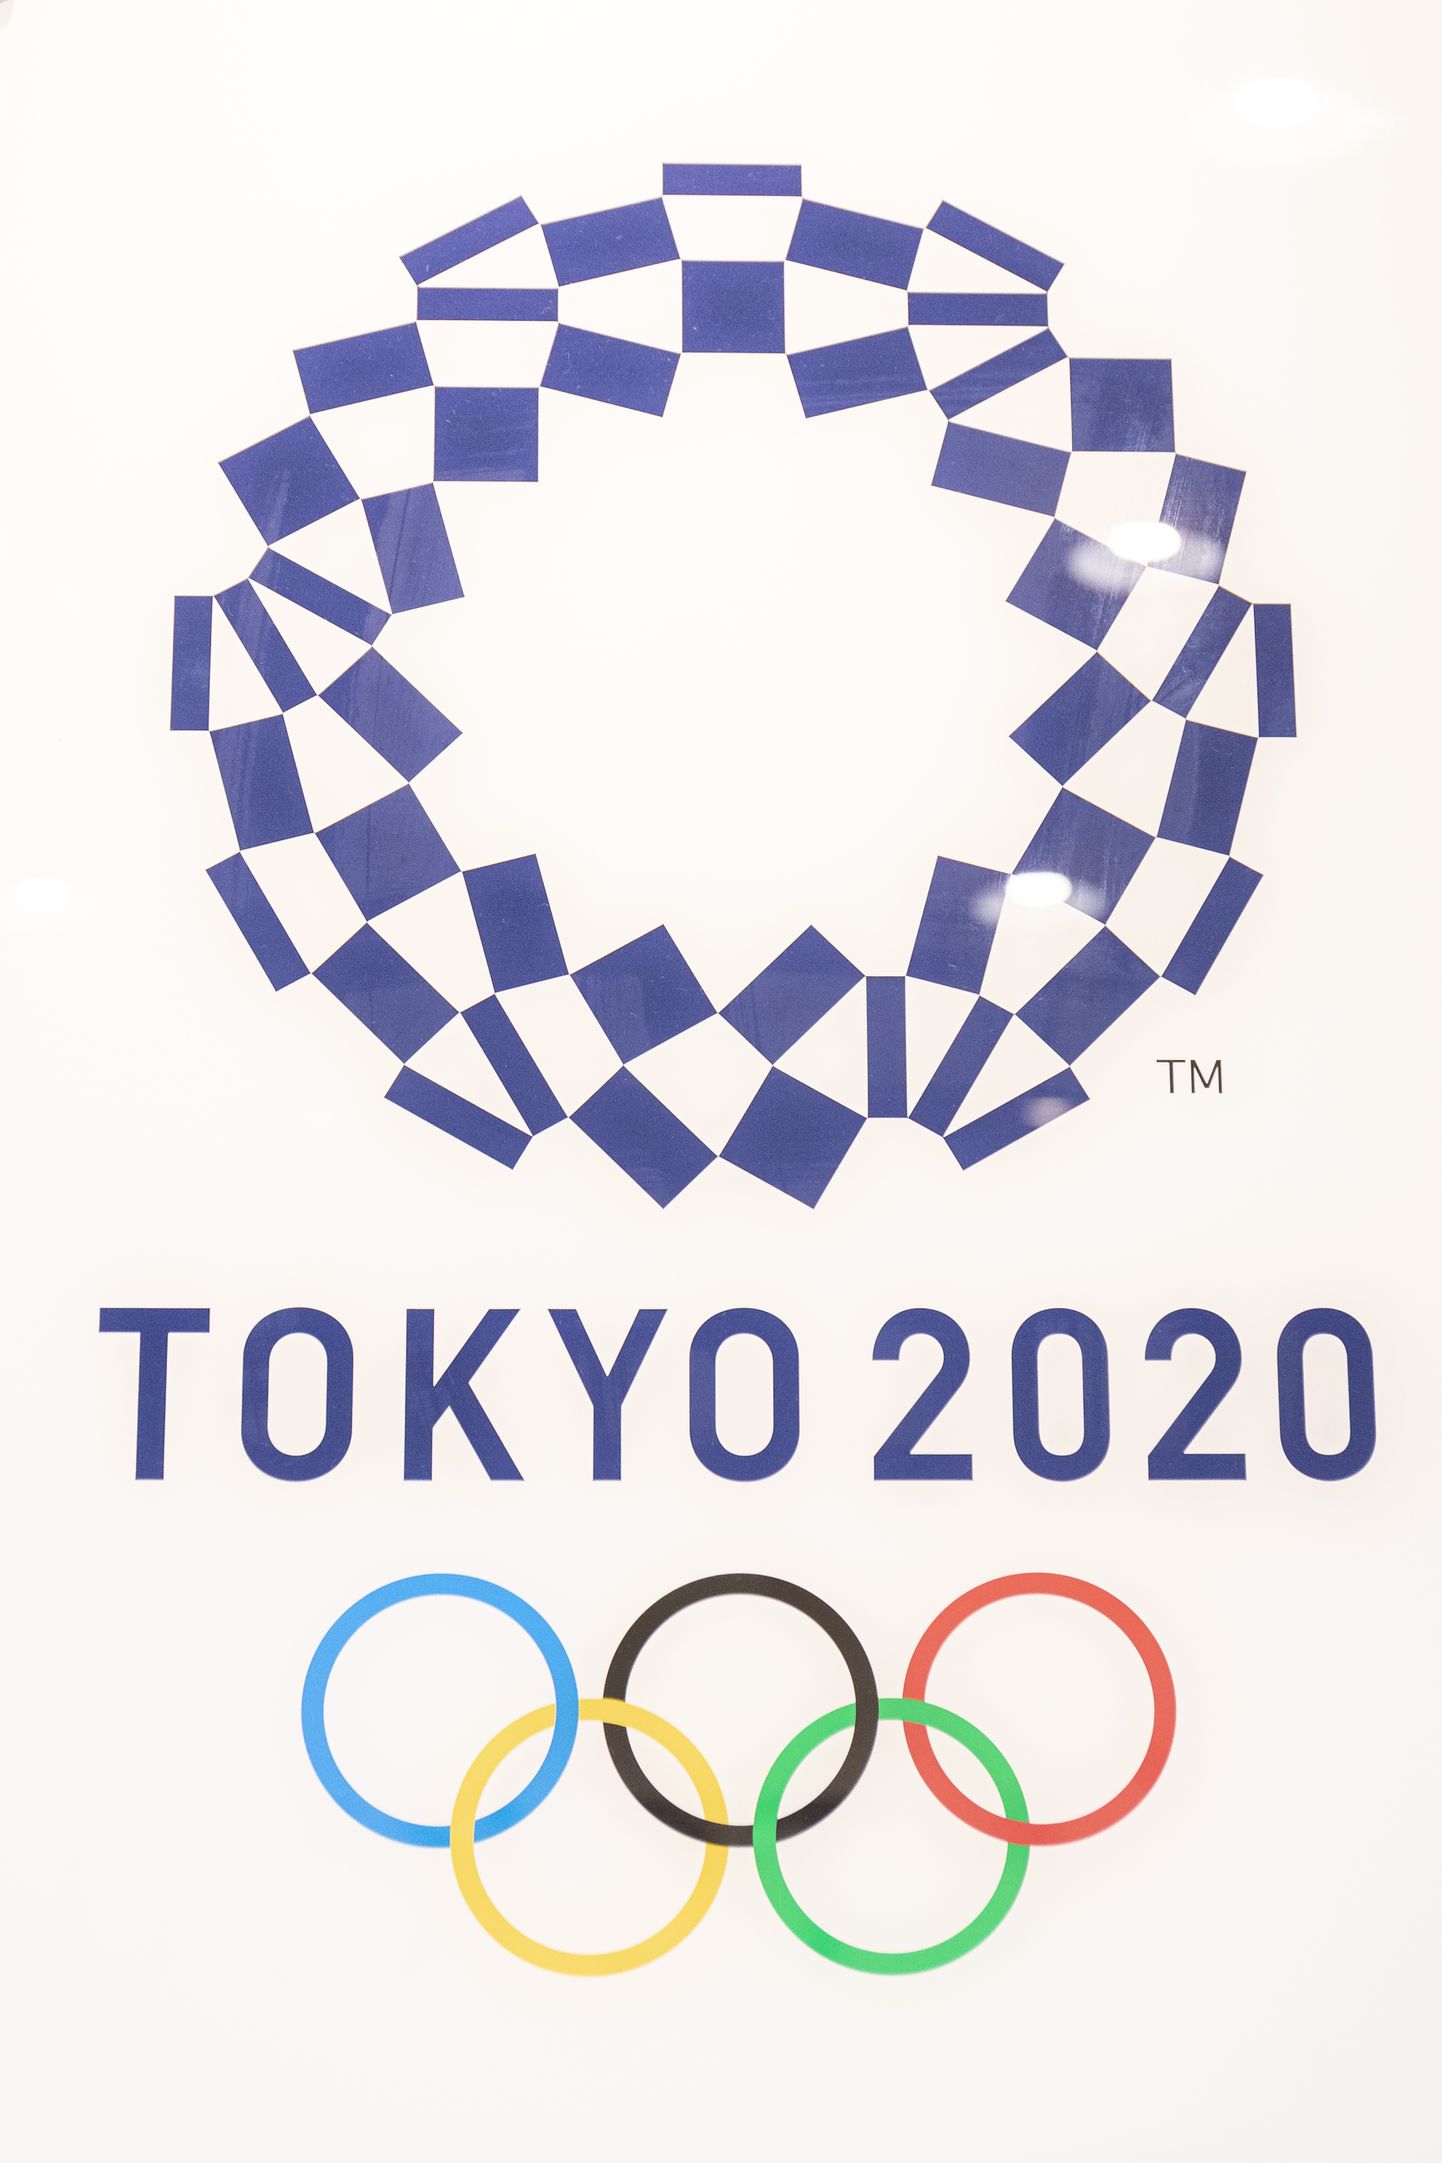 Tokyo 2020 logo.